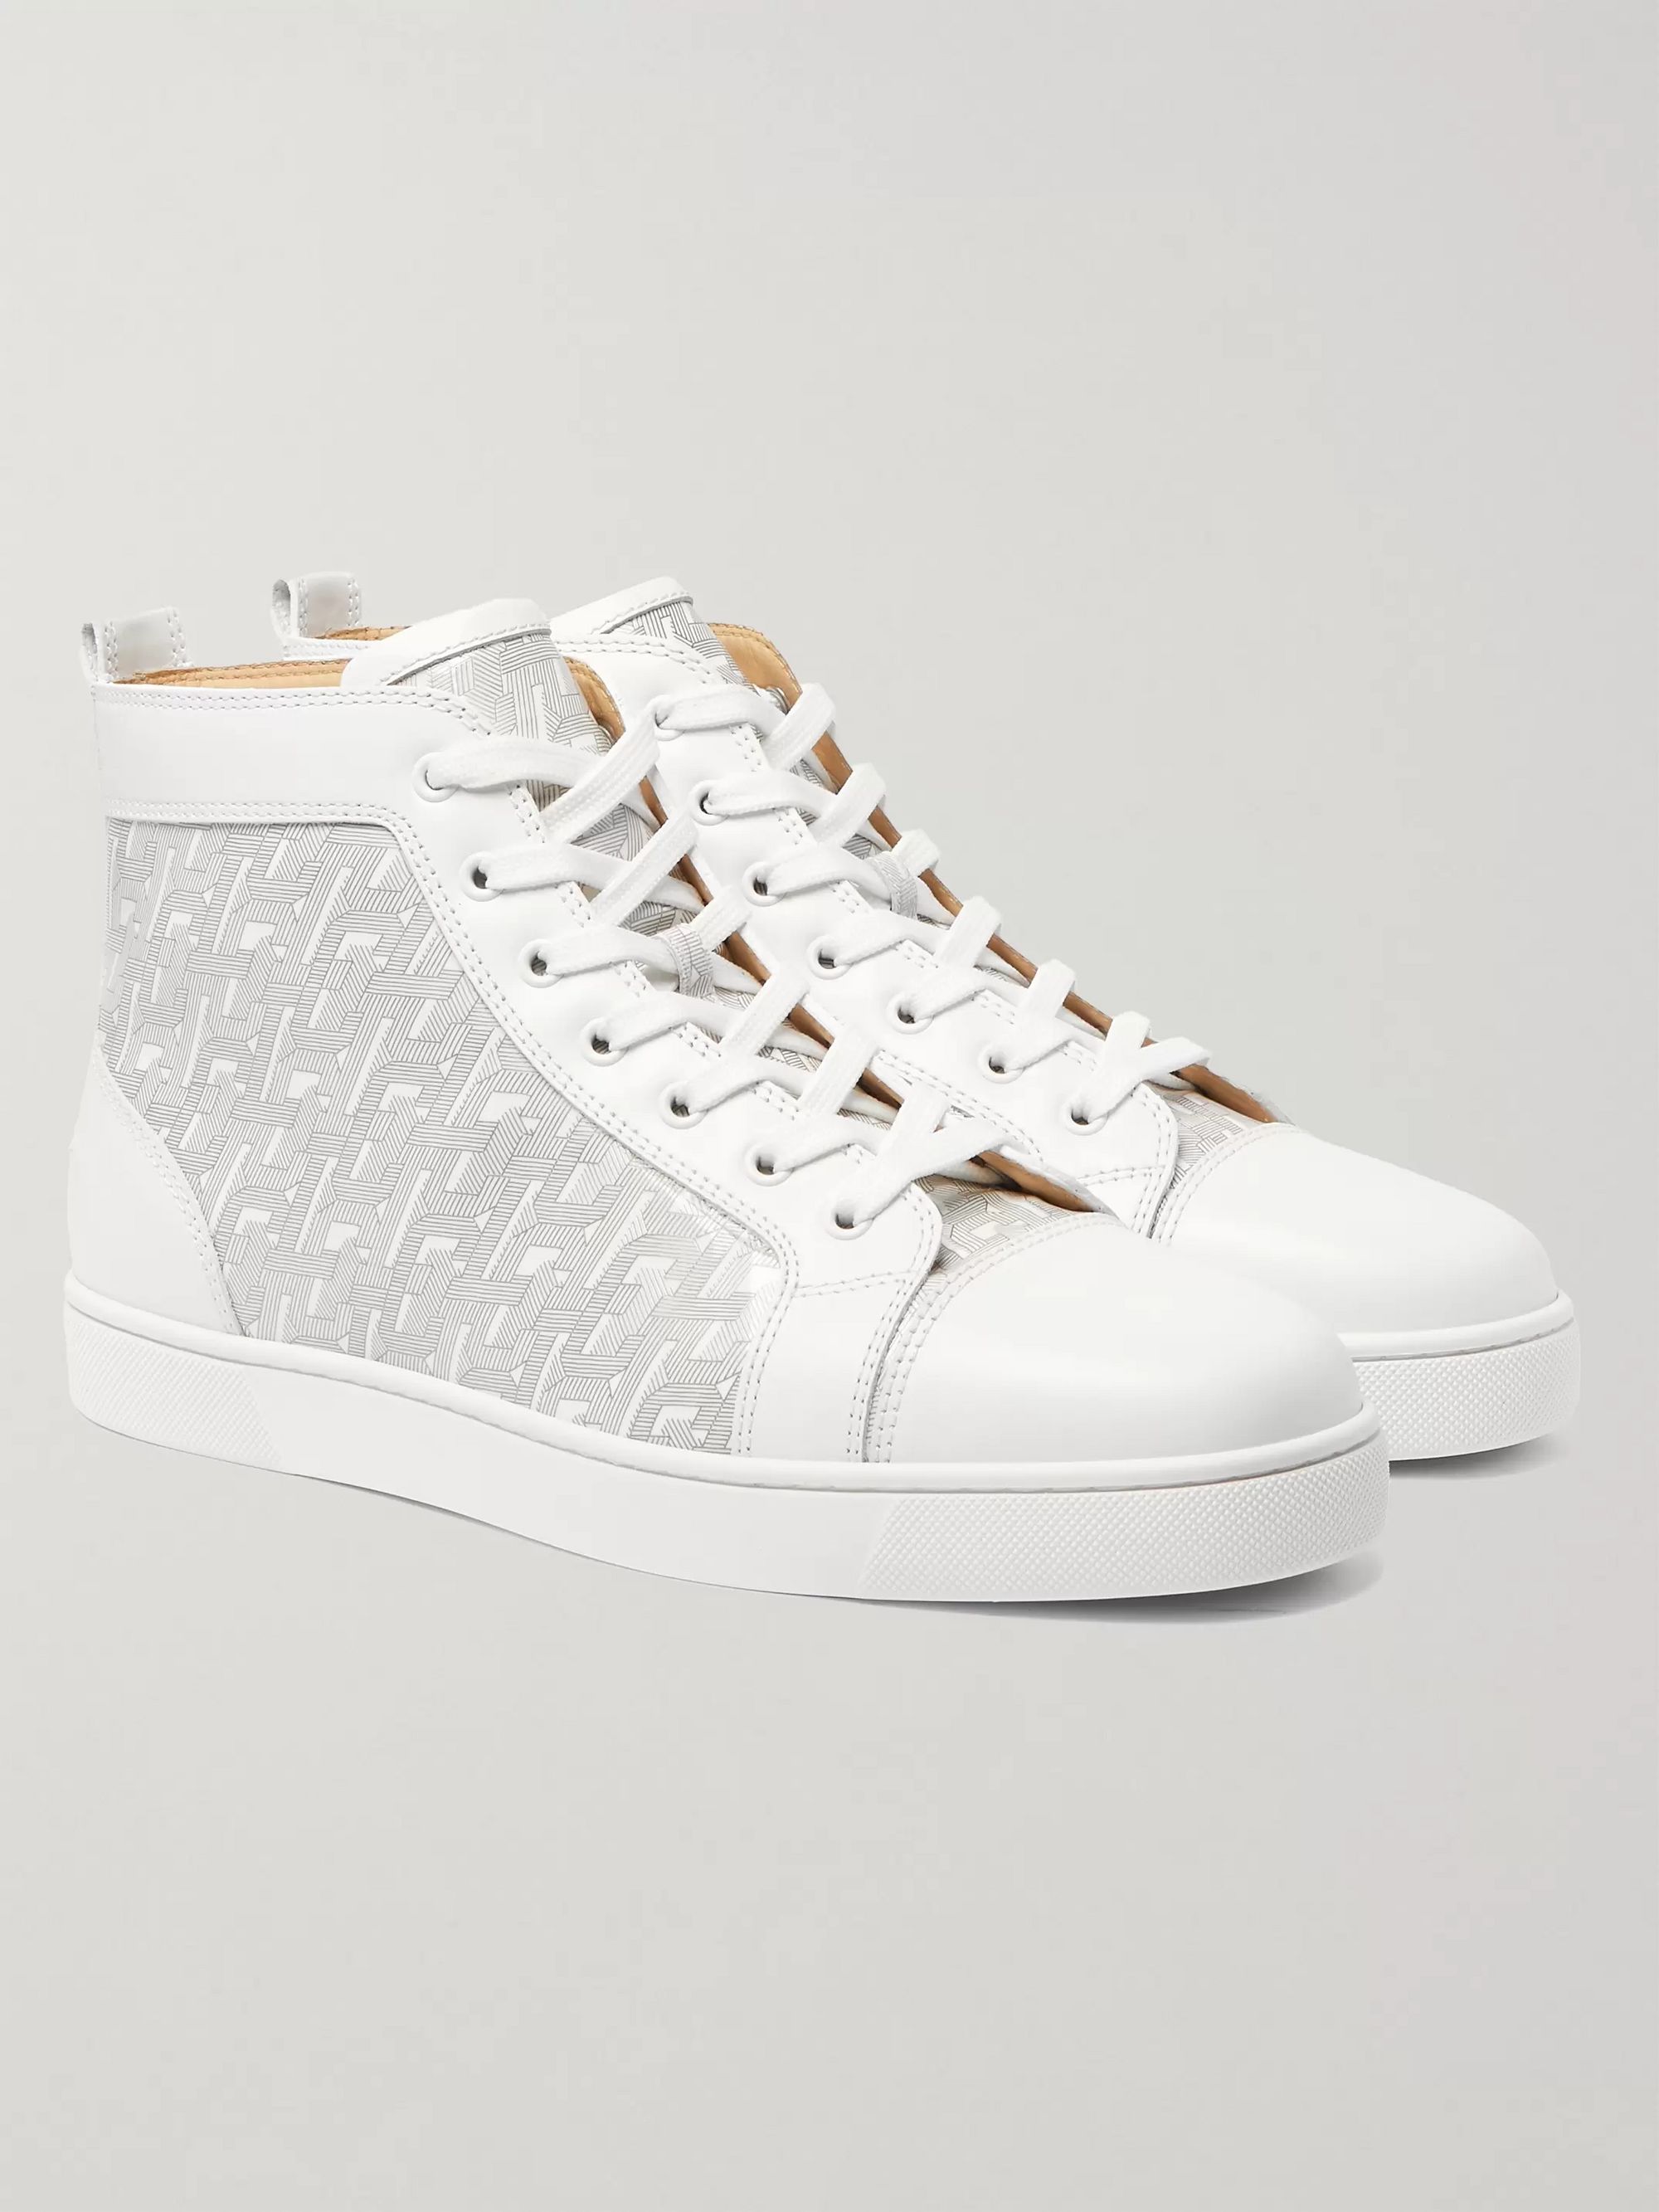 louboutin sneaker white